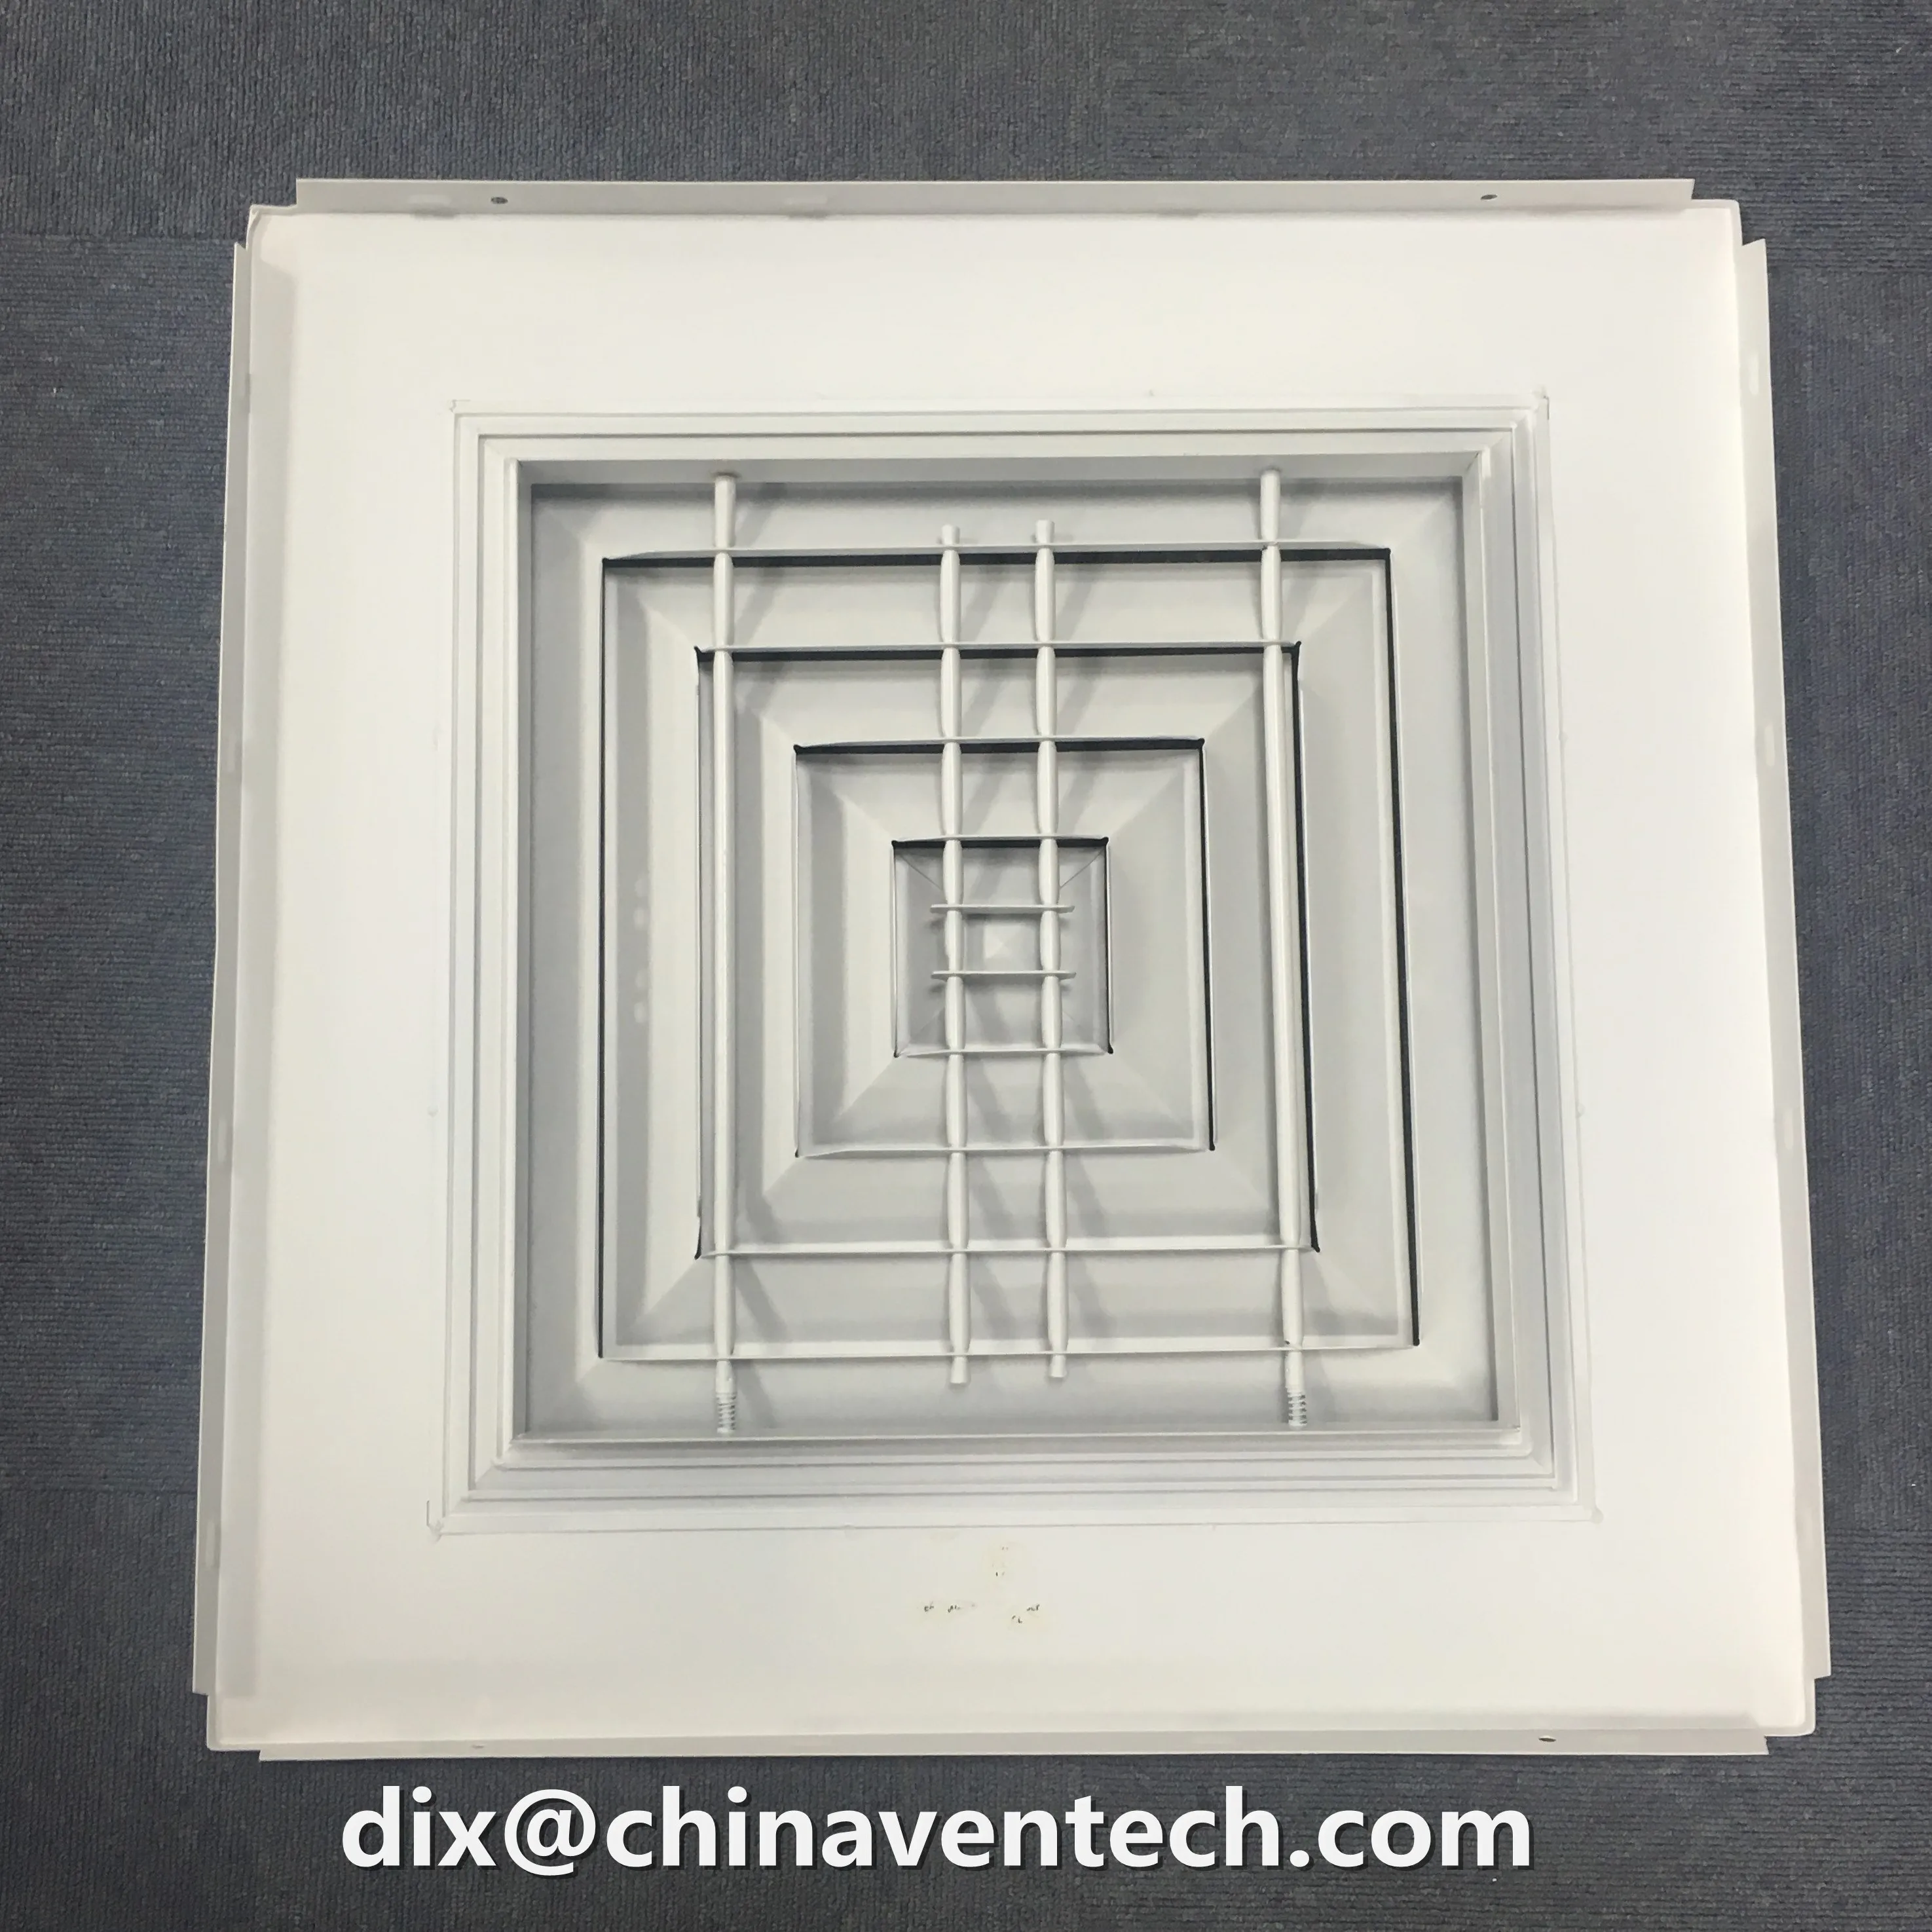 Air handling unit aluminum ventilation air vent square 4 way diffuser for ceiling replacement